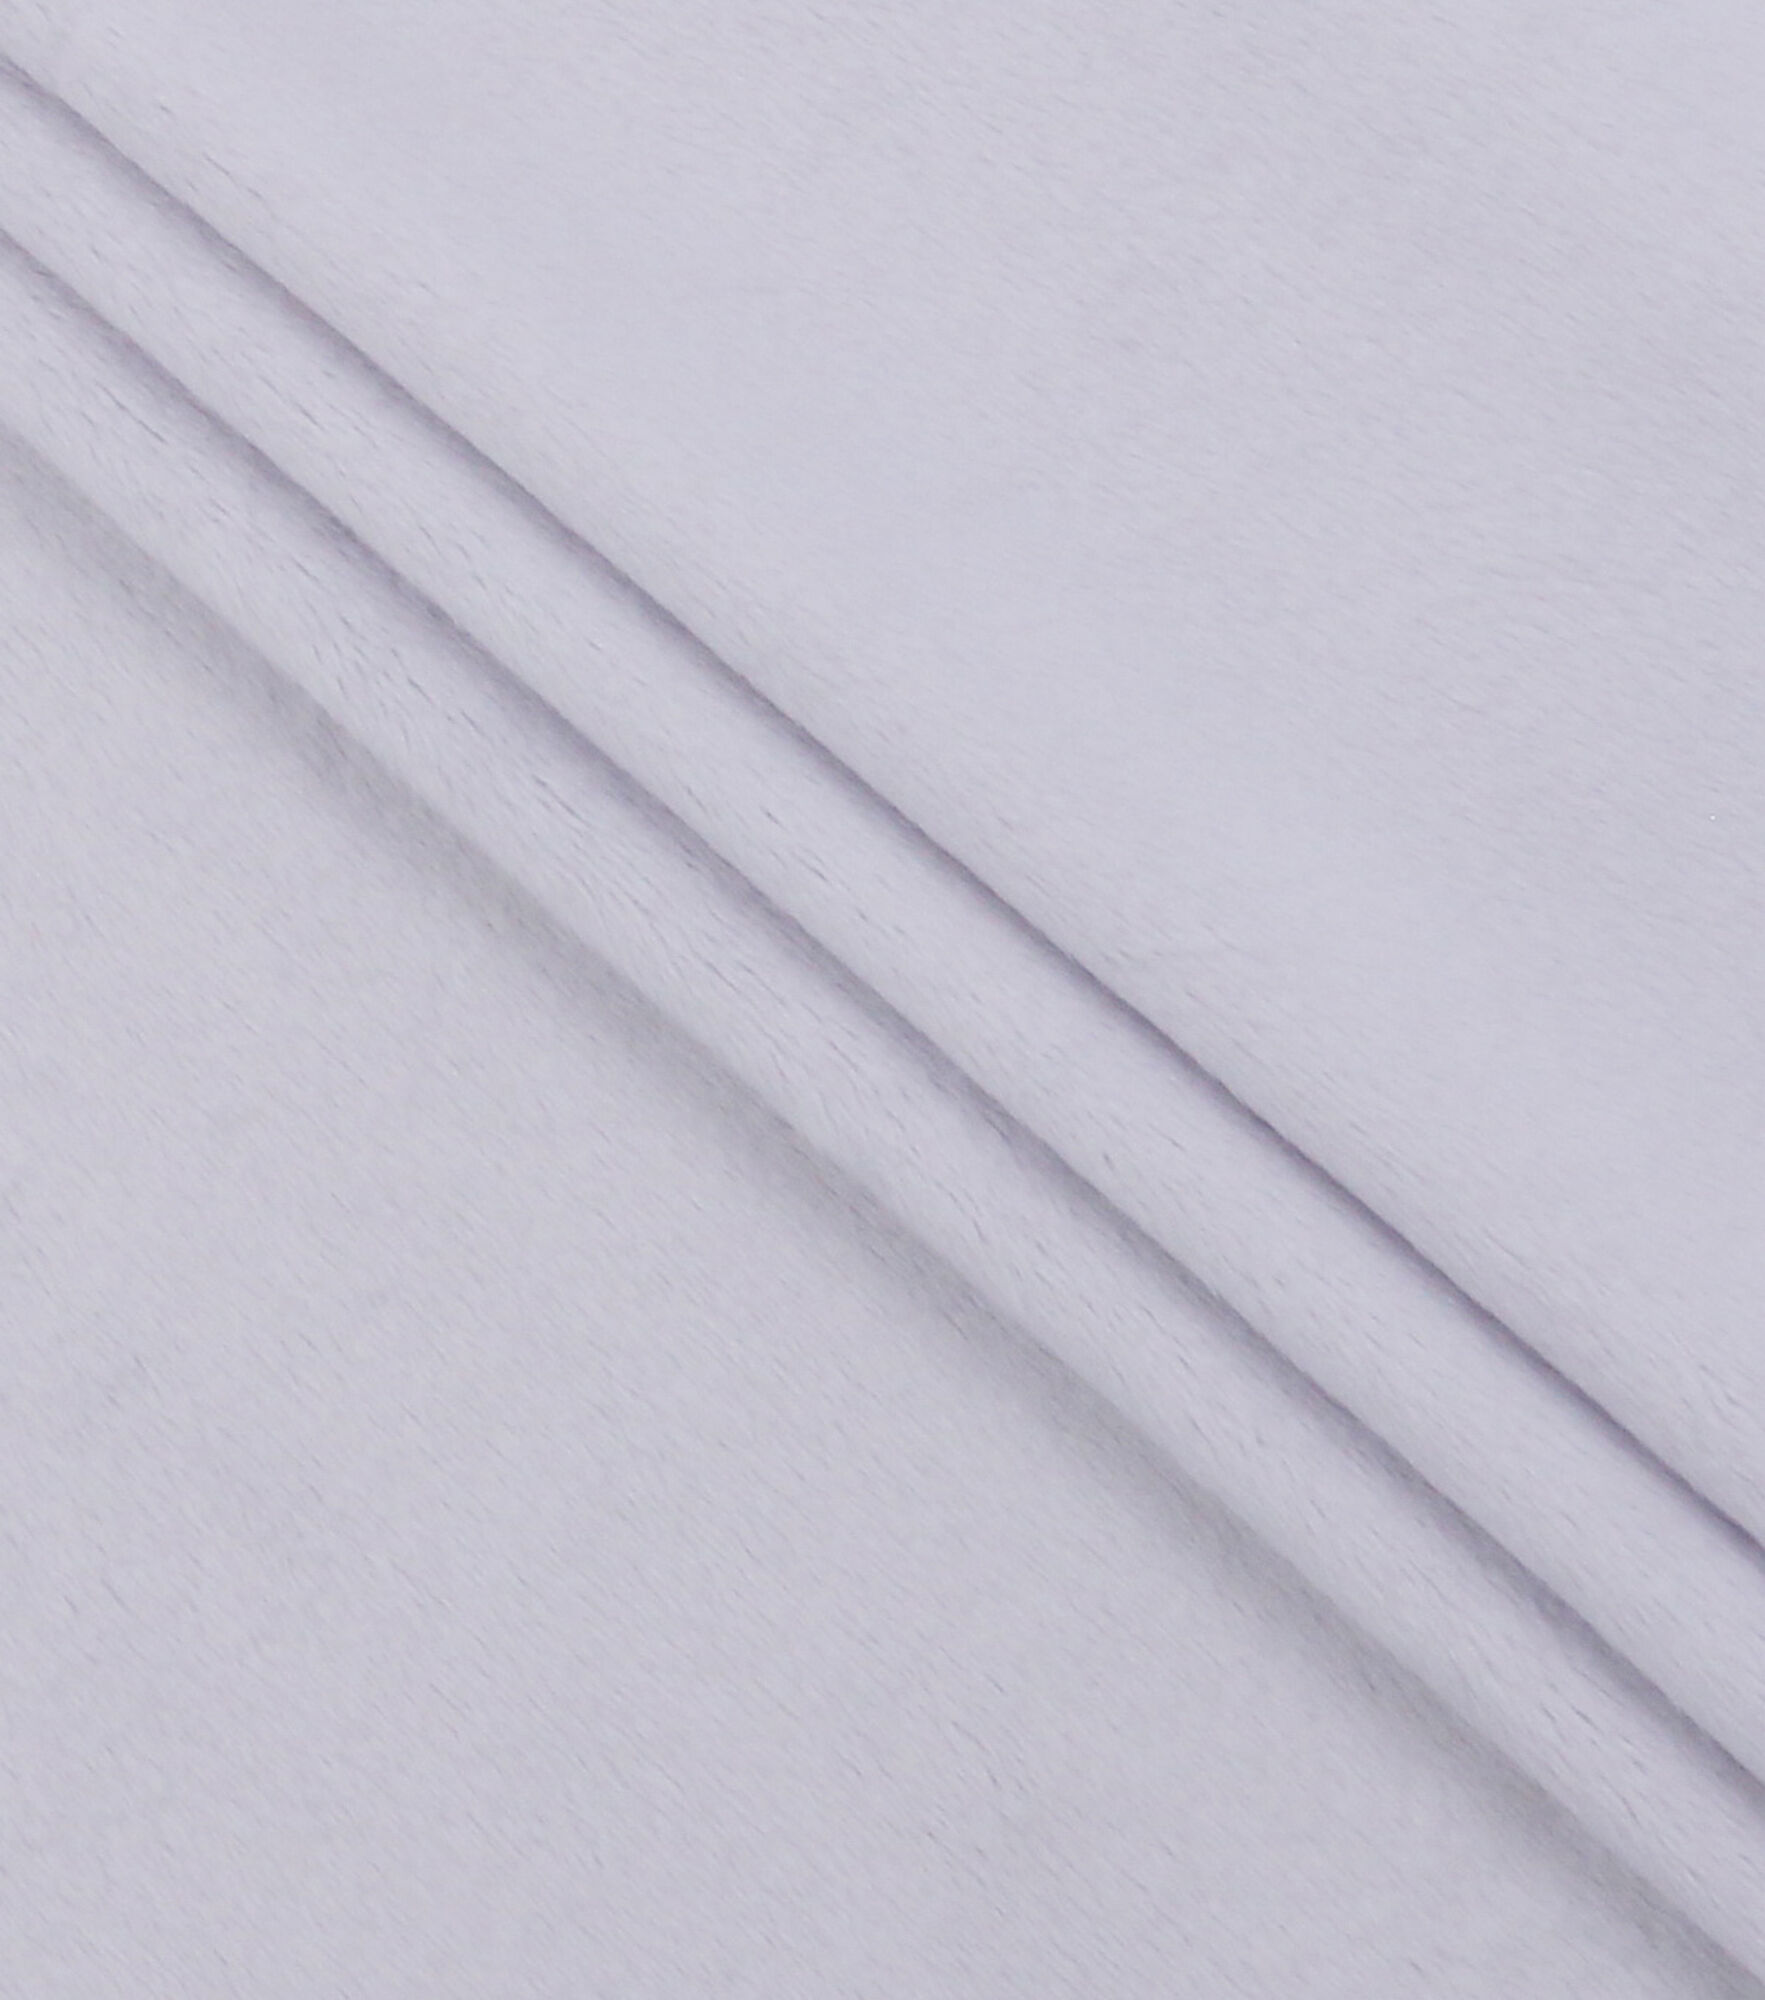  Smooth Minky Super Soft Cuddle Fleece Fabric 58/60 Wide Sold  by The Yard (Aqua)